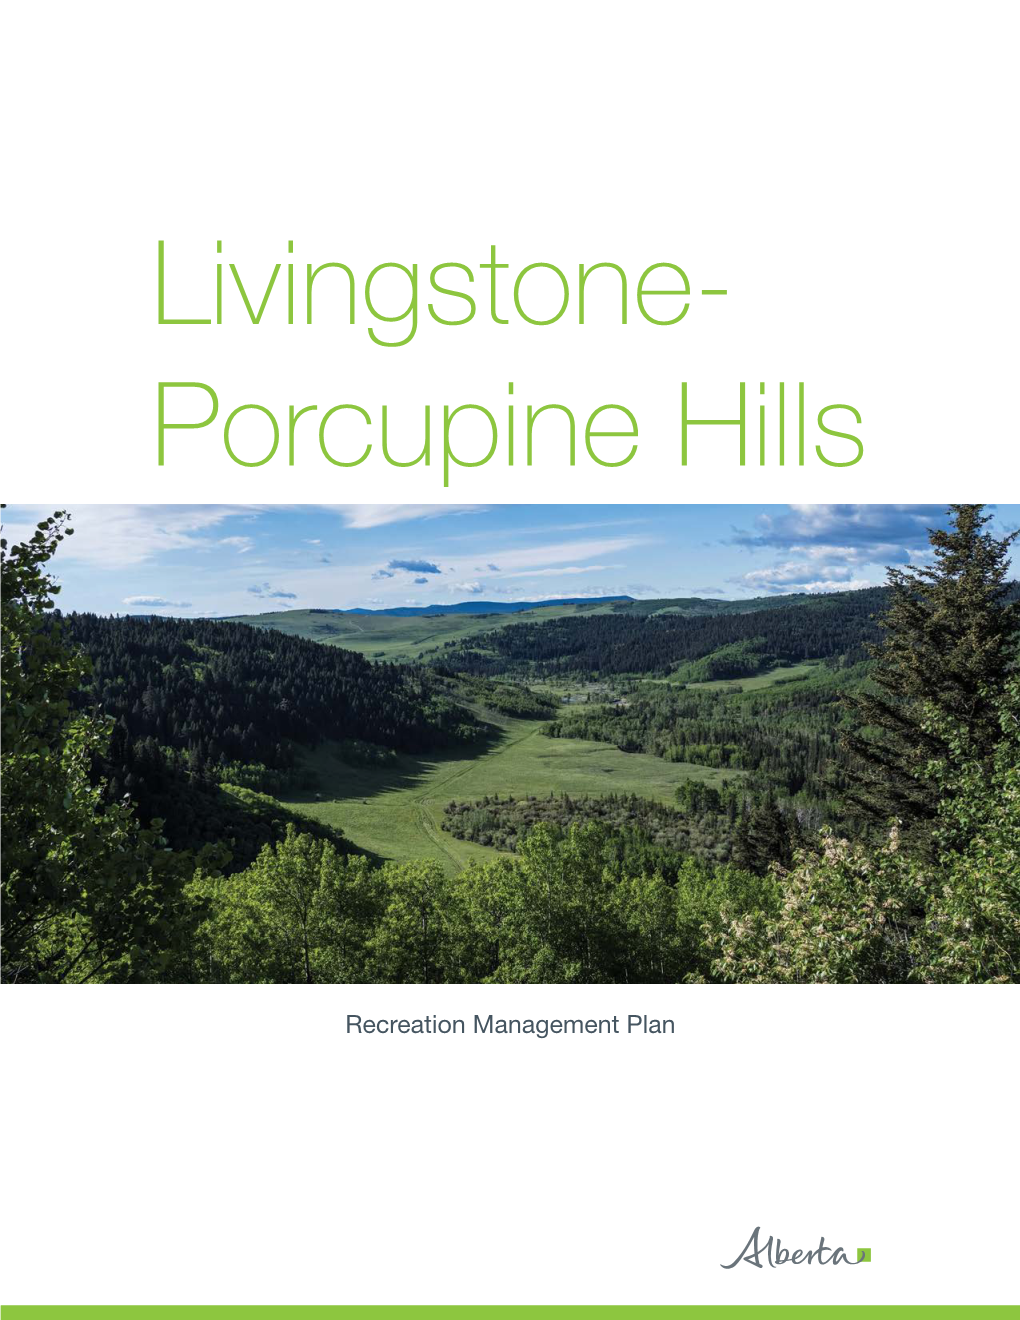 Livingstone-Porcupine Hills Recreational Management Plan